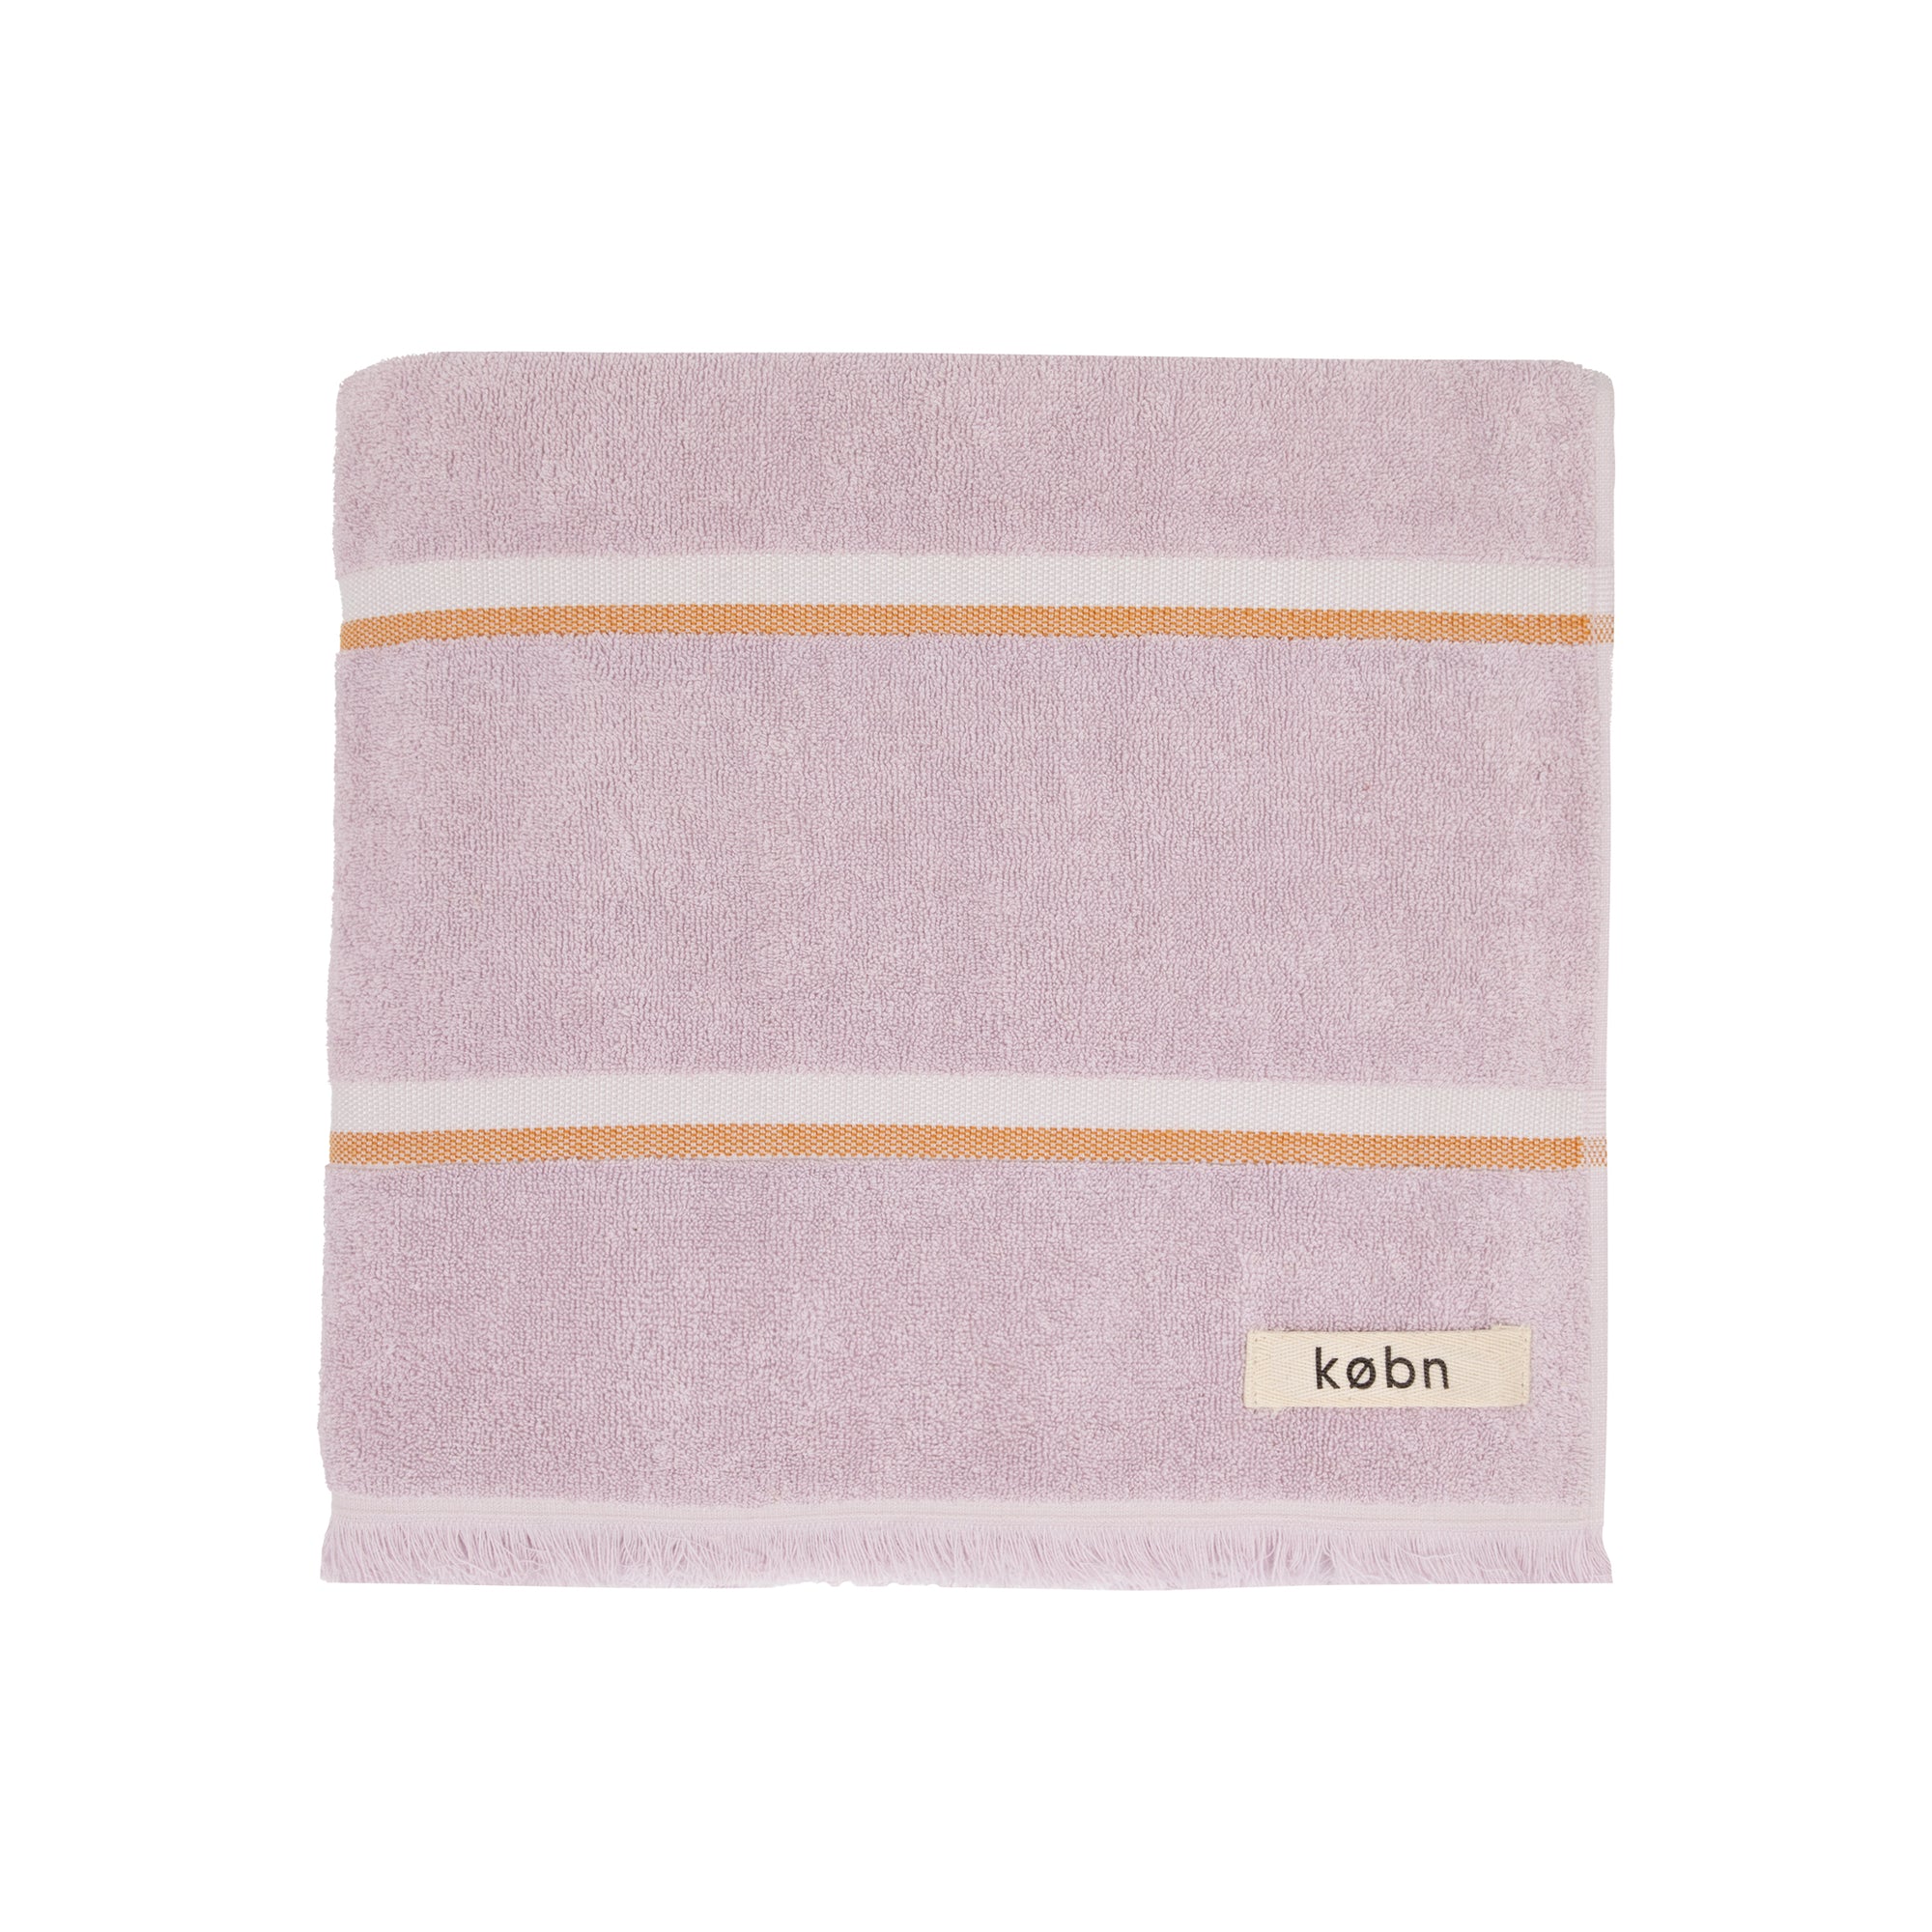 Lilac Towel